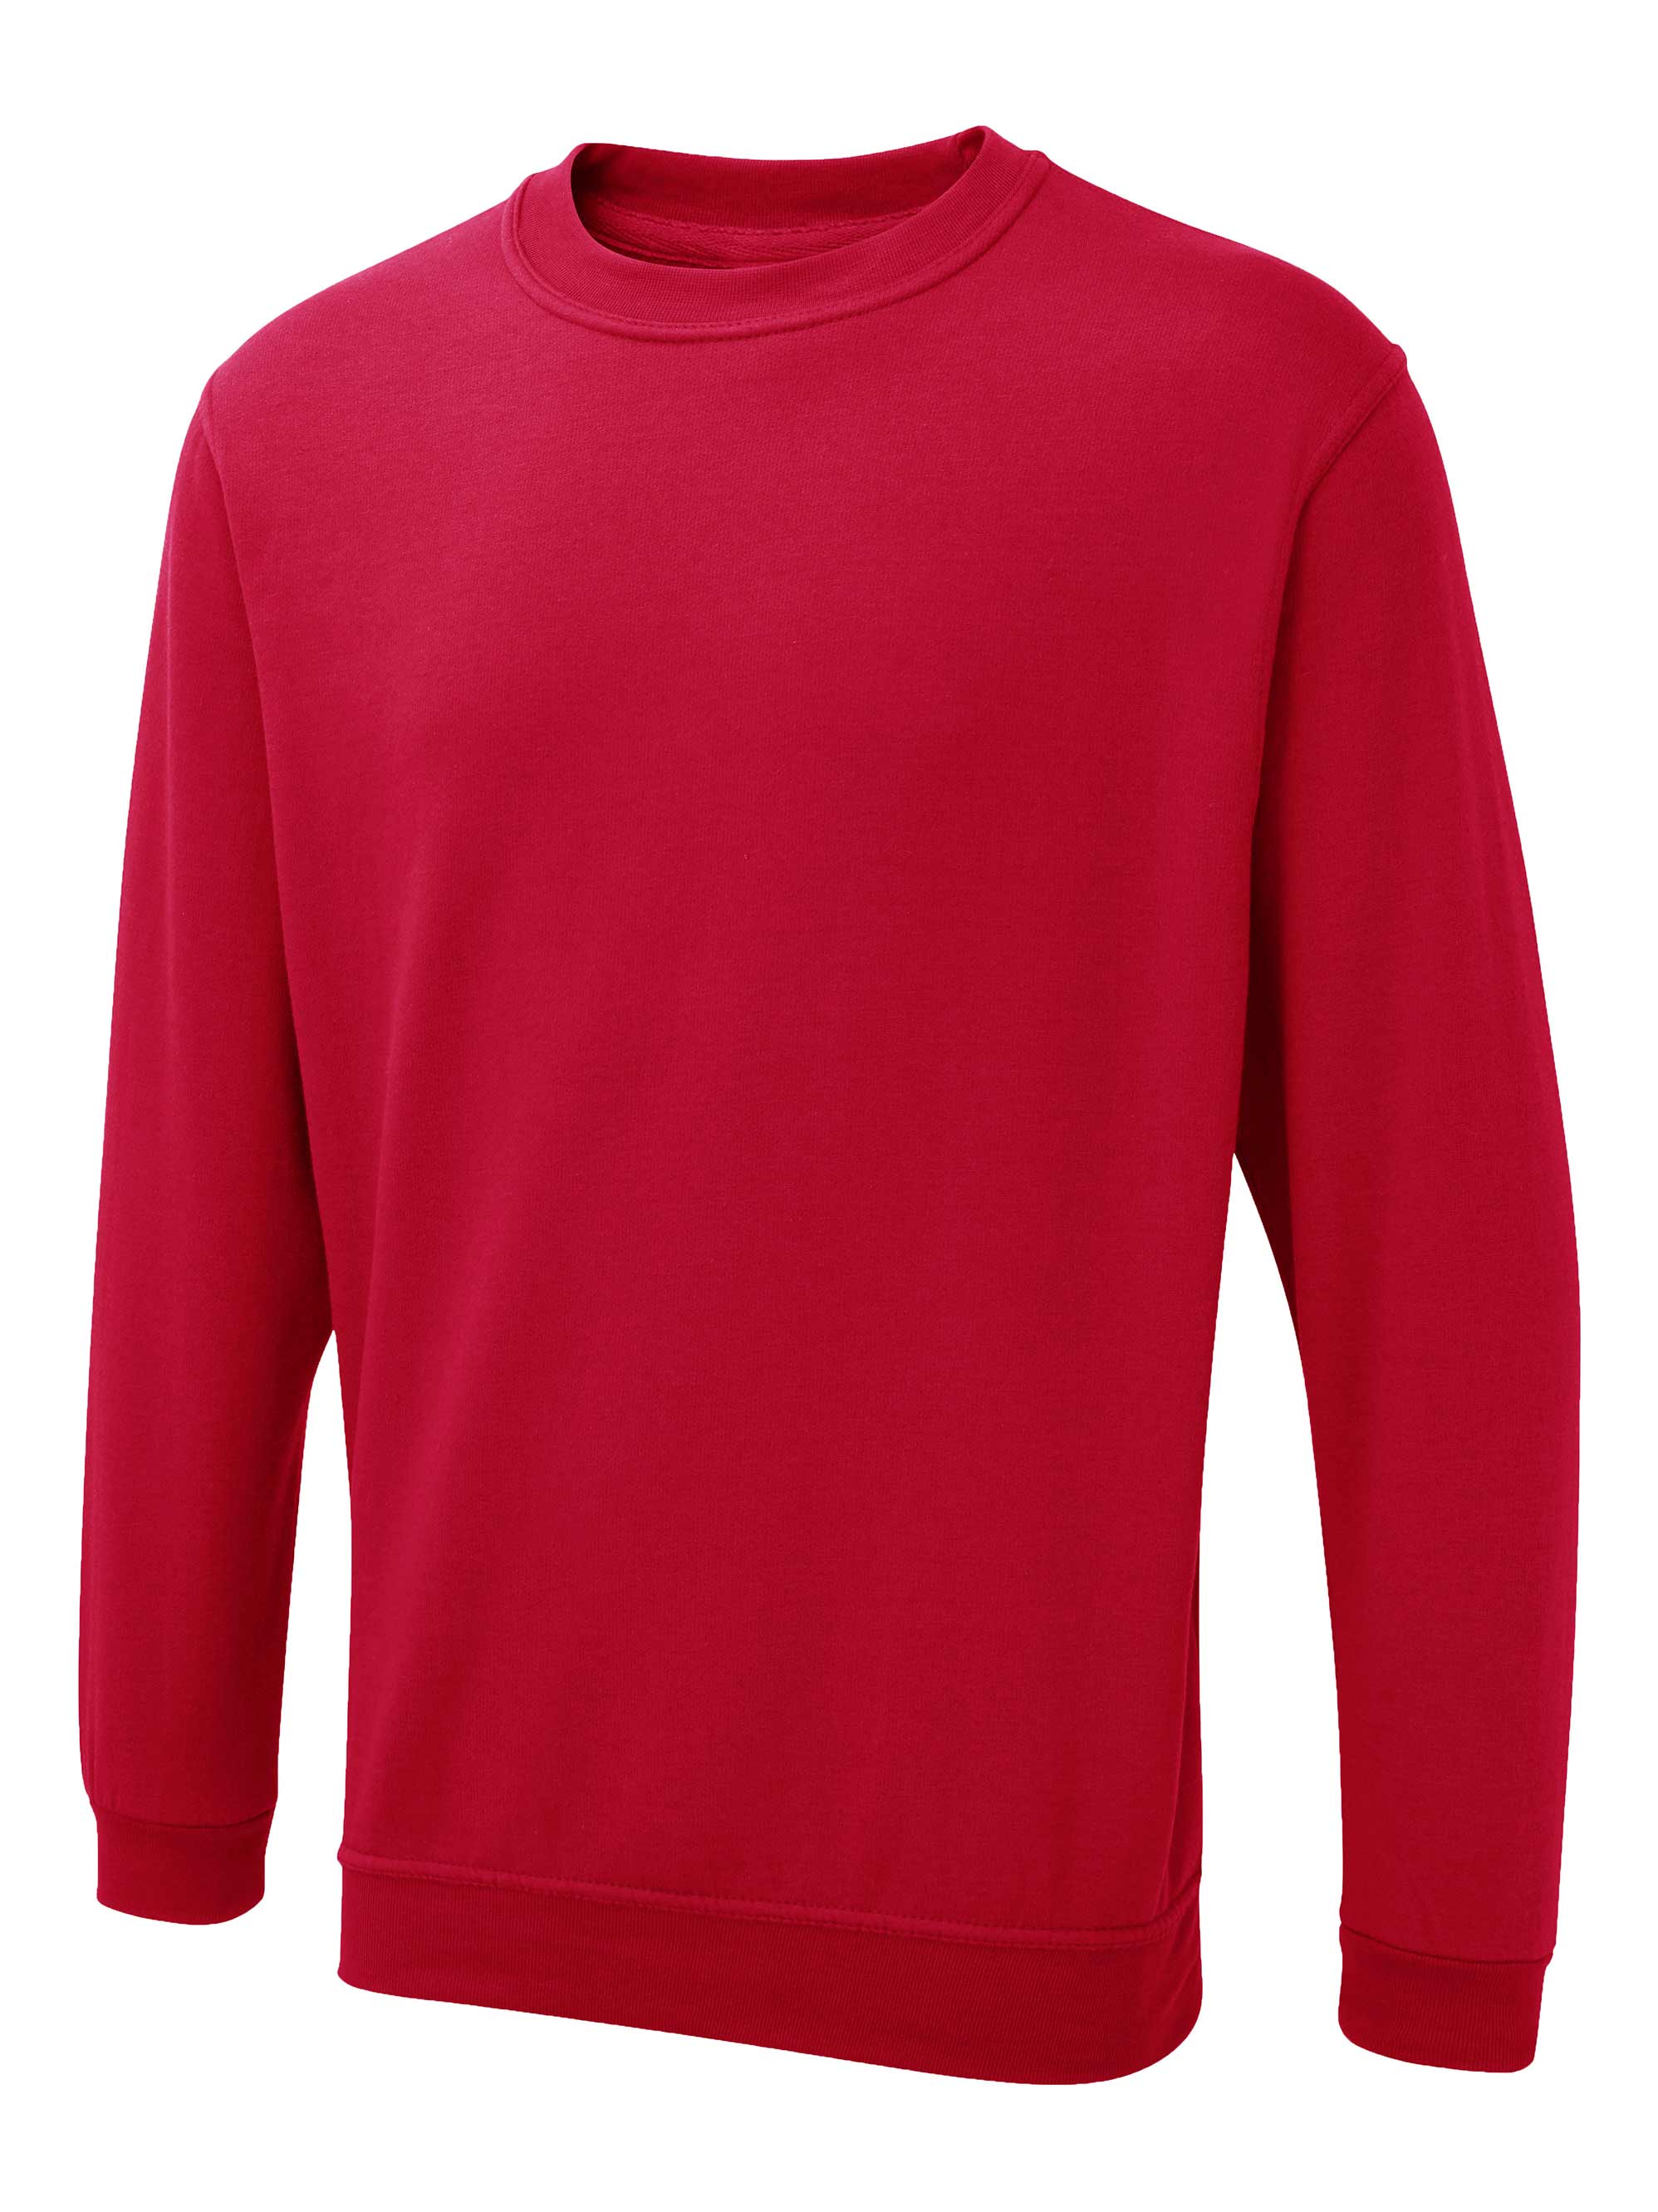 Uneek The UX Sweatshirt - ux3 (Red)